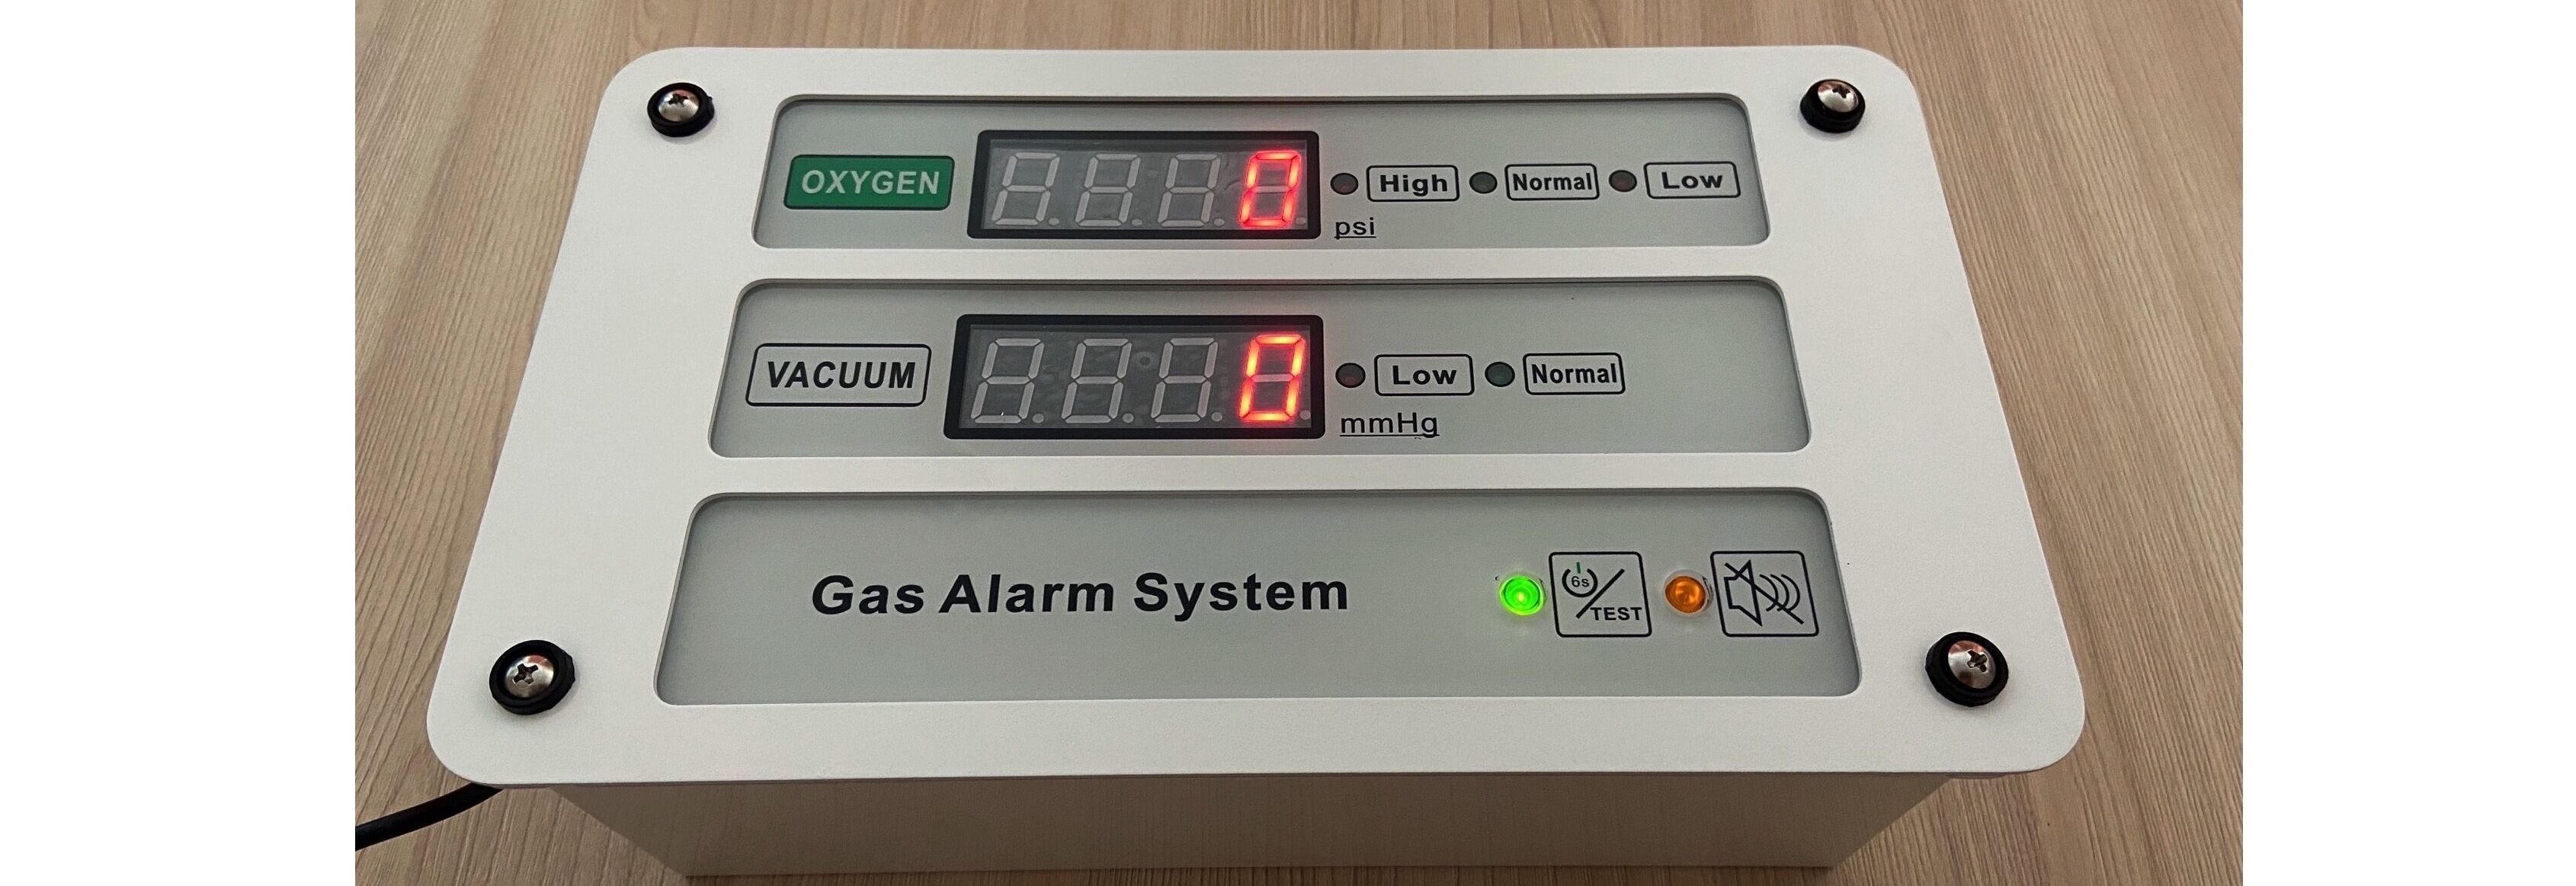 Medical Gas Digital Alarm Unit_เครื่องเตือนแรงดันก๊าซในระบบก๊าซไปป์ไลน์โรงพยาบาล